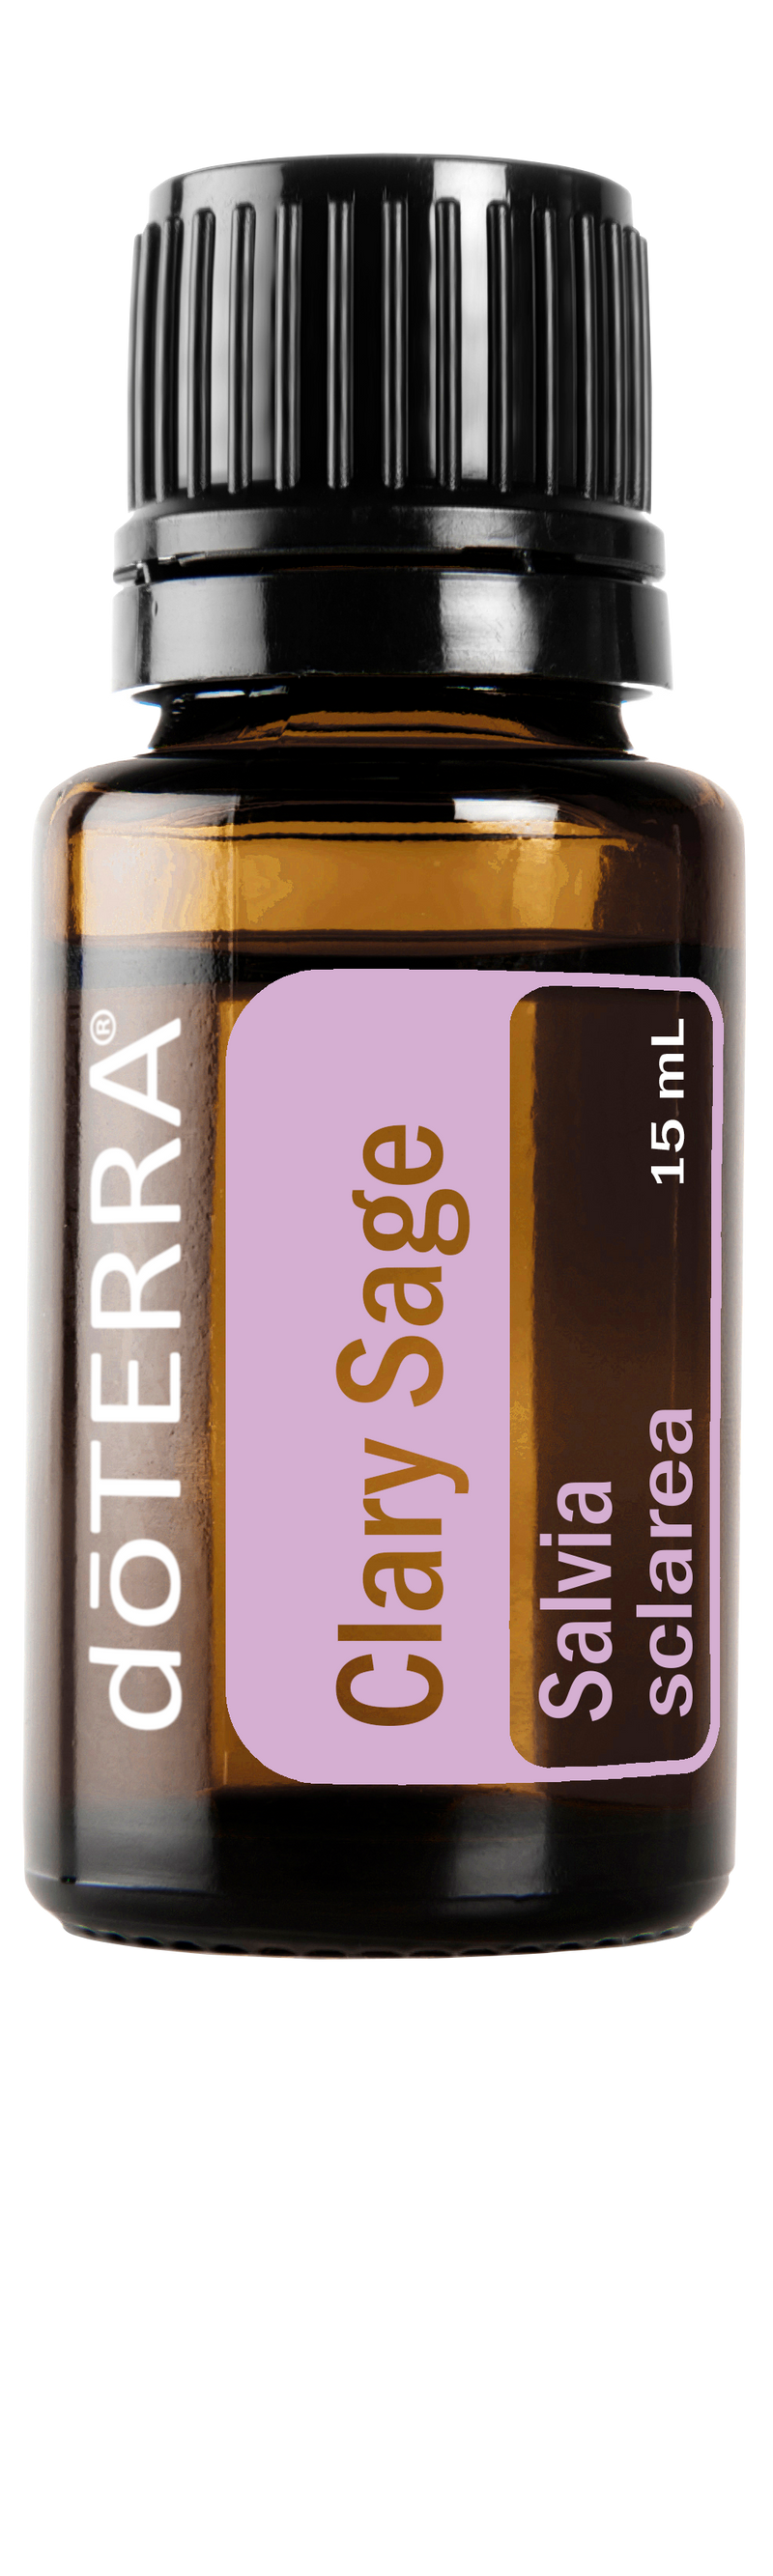 CLARY SAGE OIL - dōTERRA Essential Oils